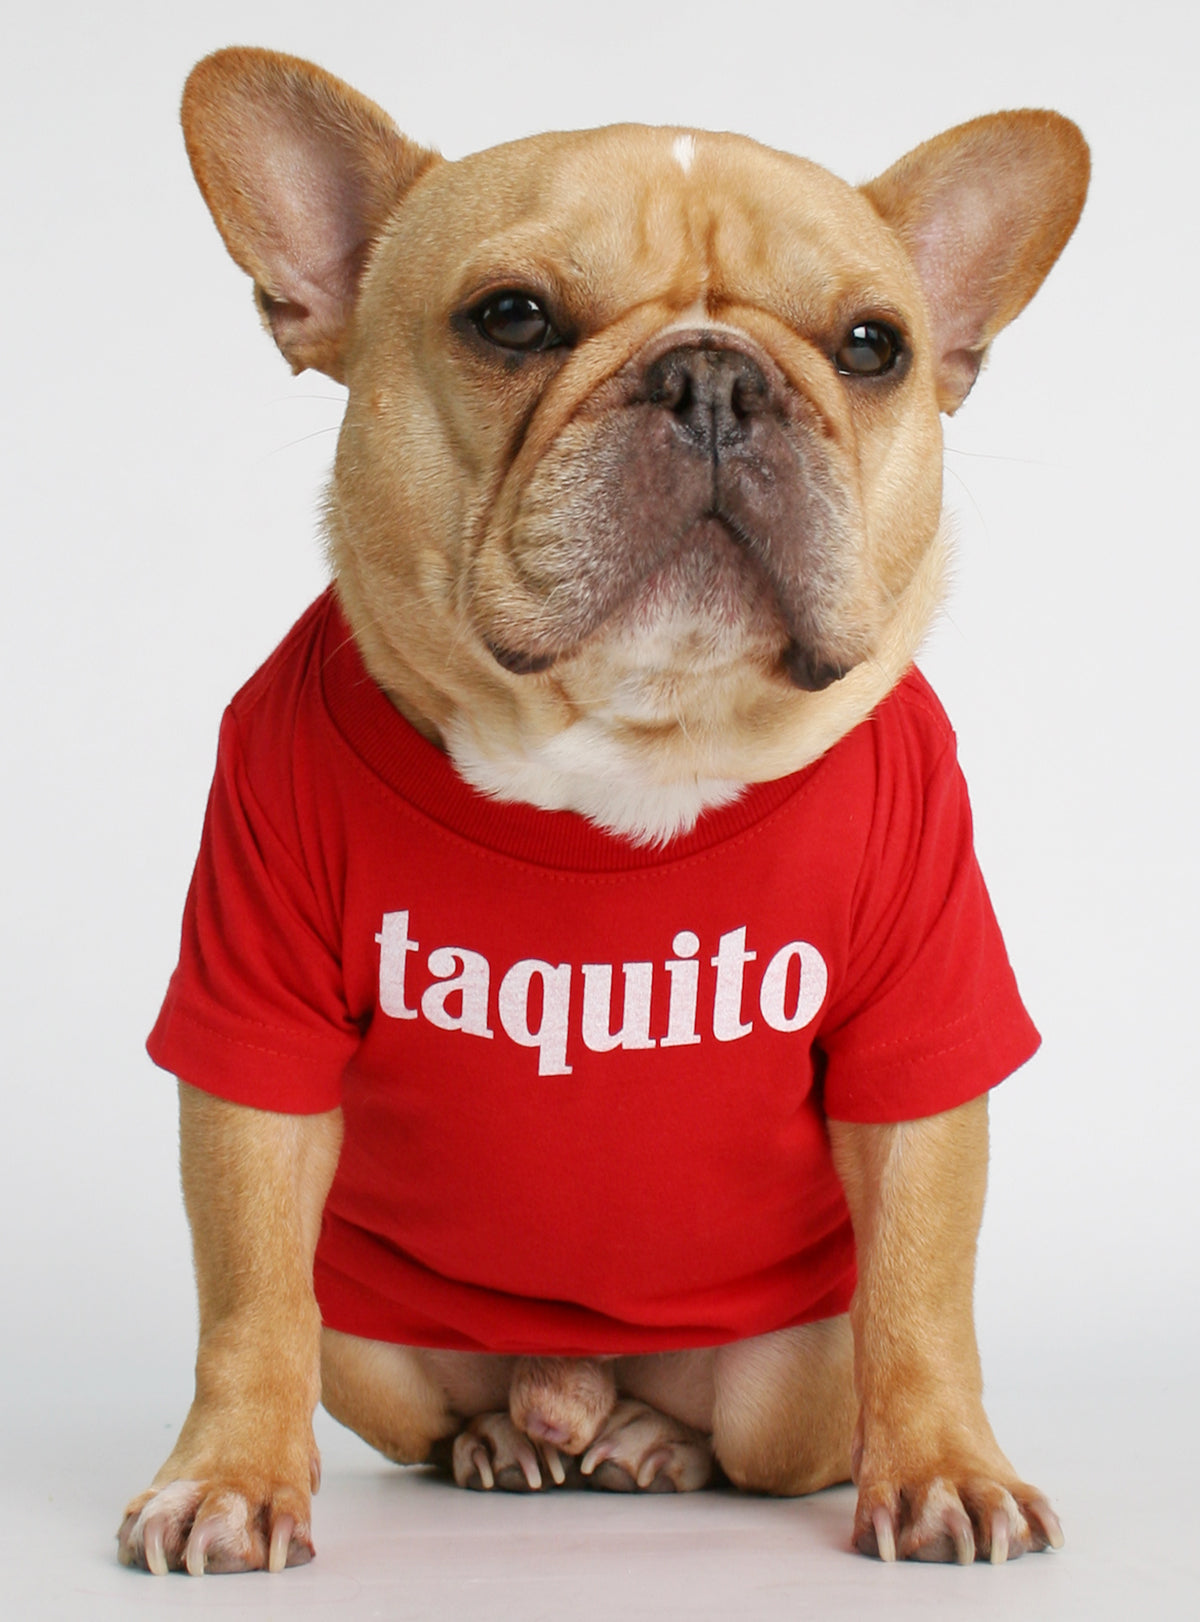 Taquito Dog Tee